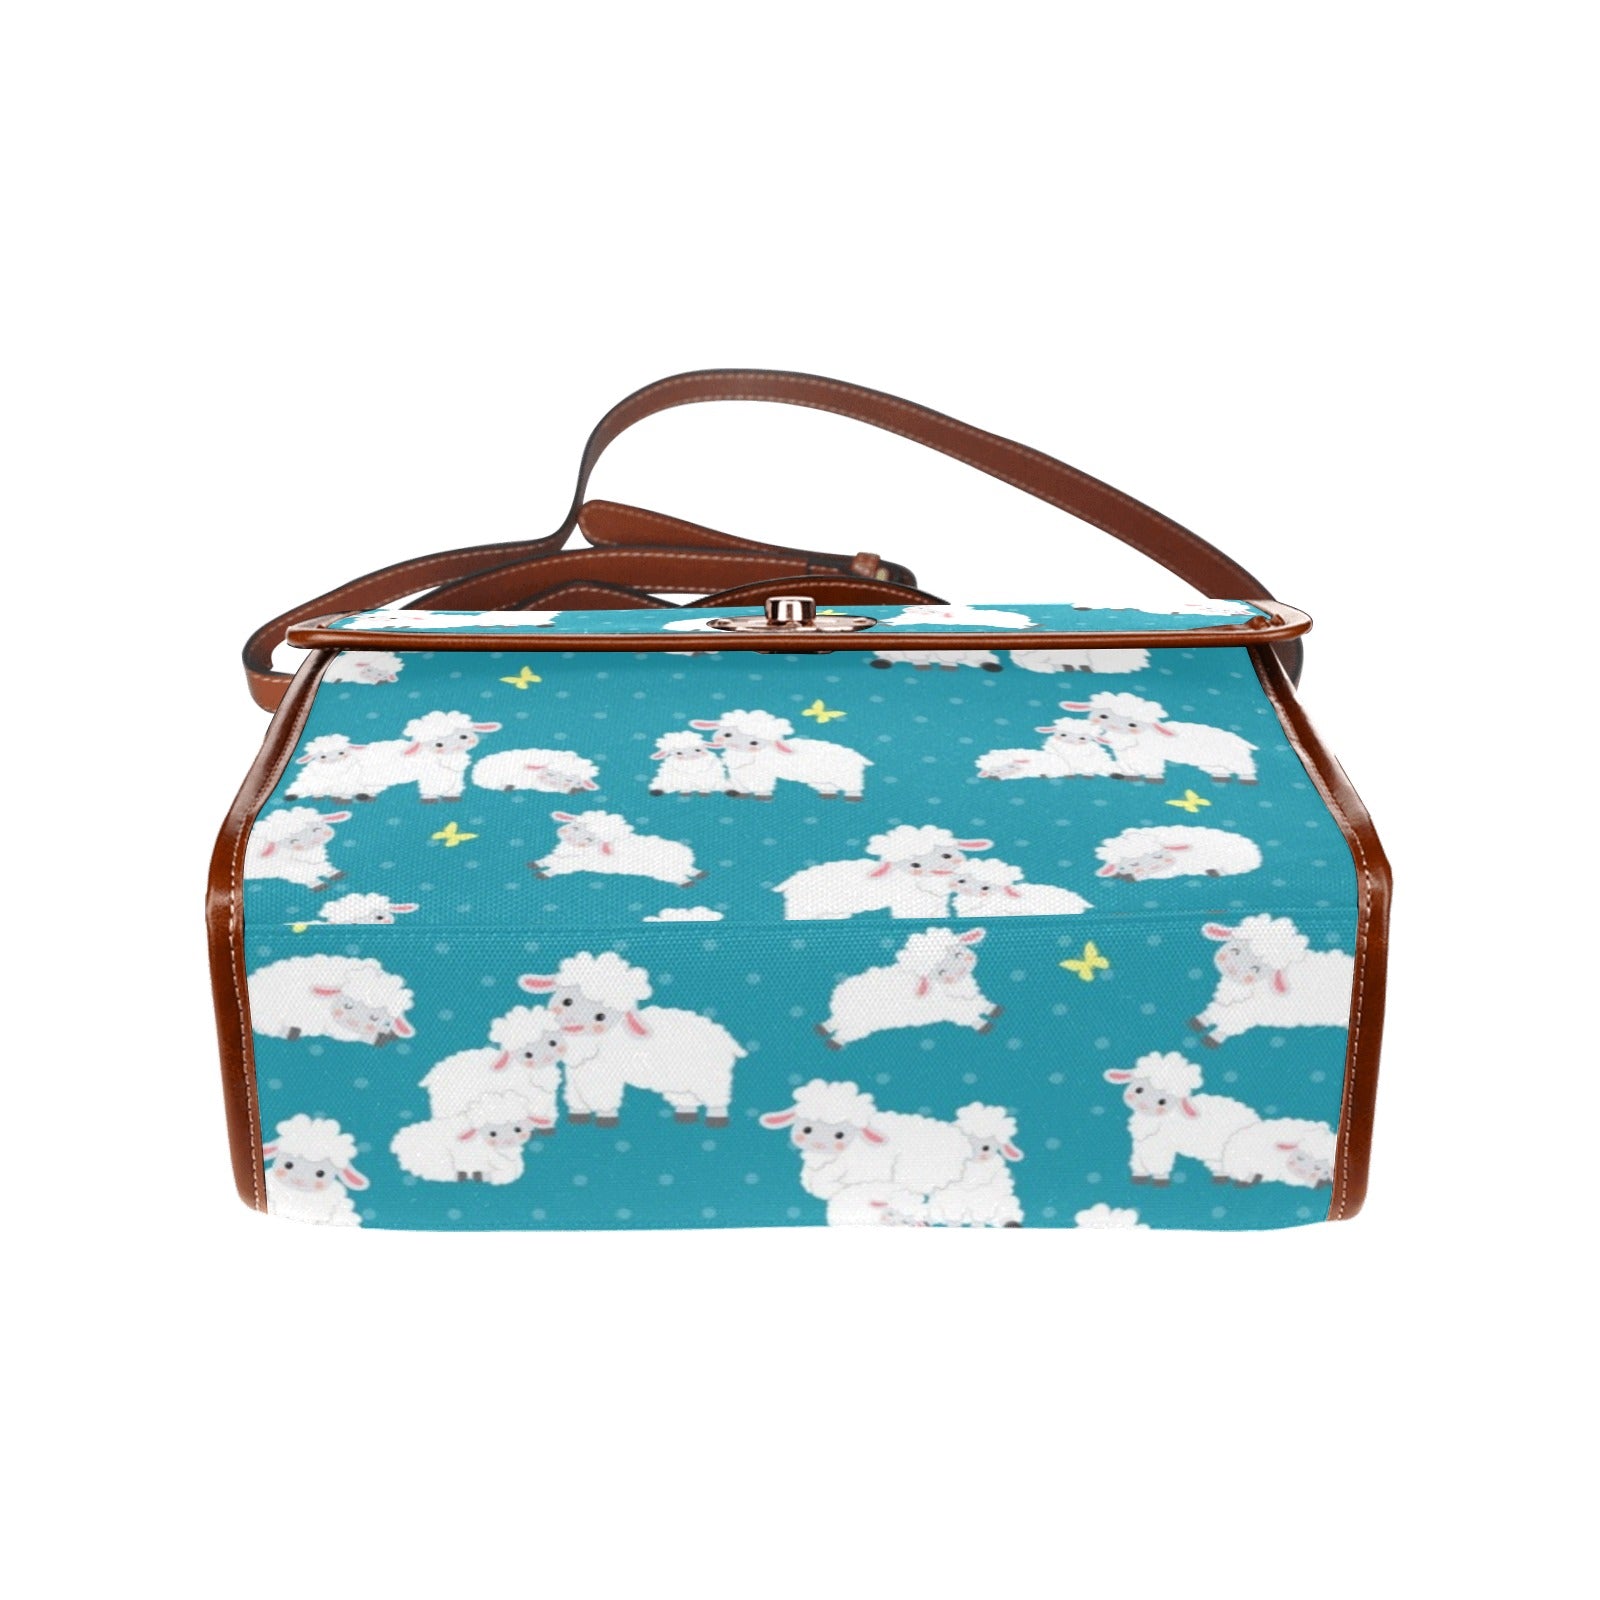 Sheep - Waterproof Canvas Handbag